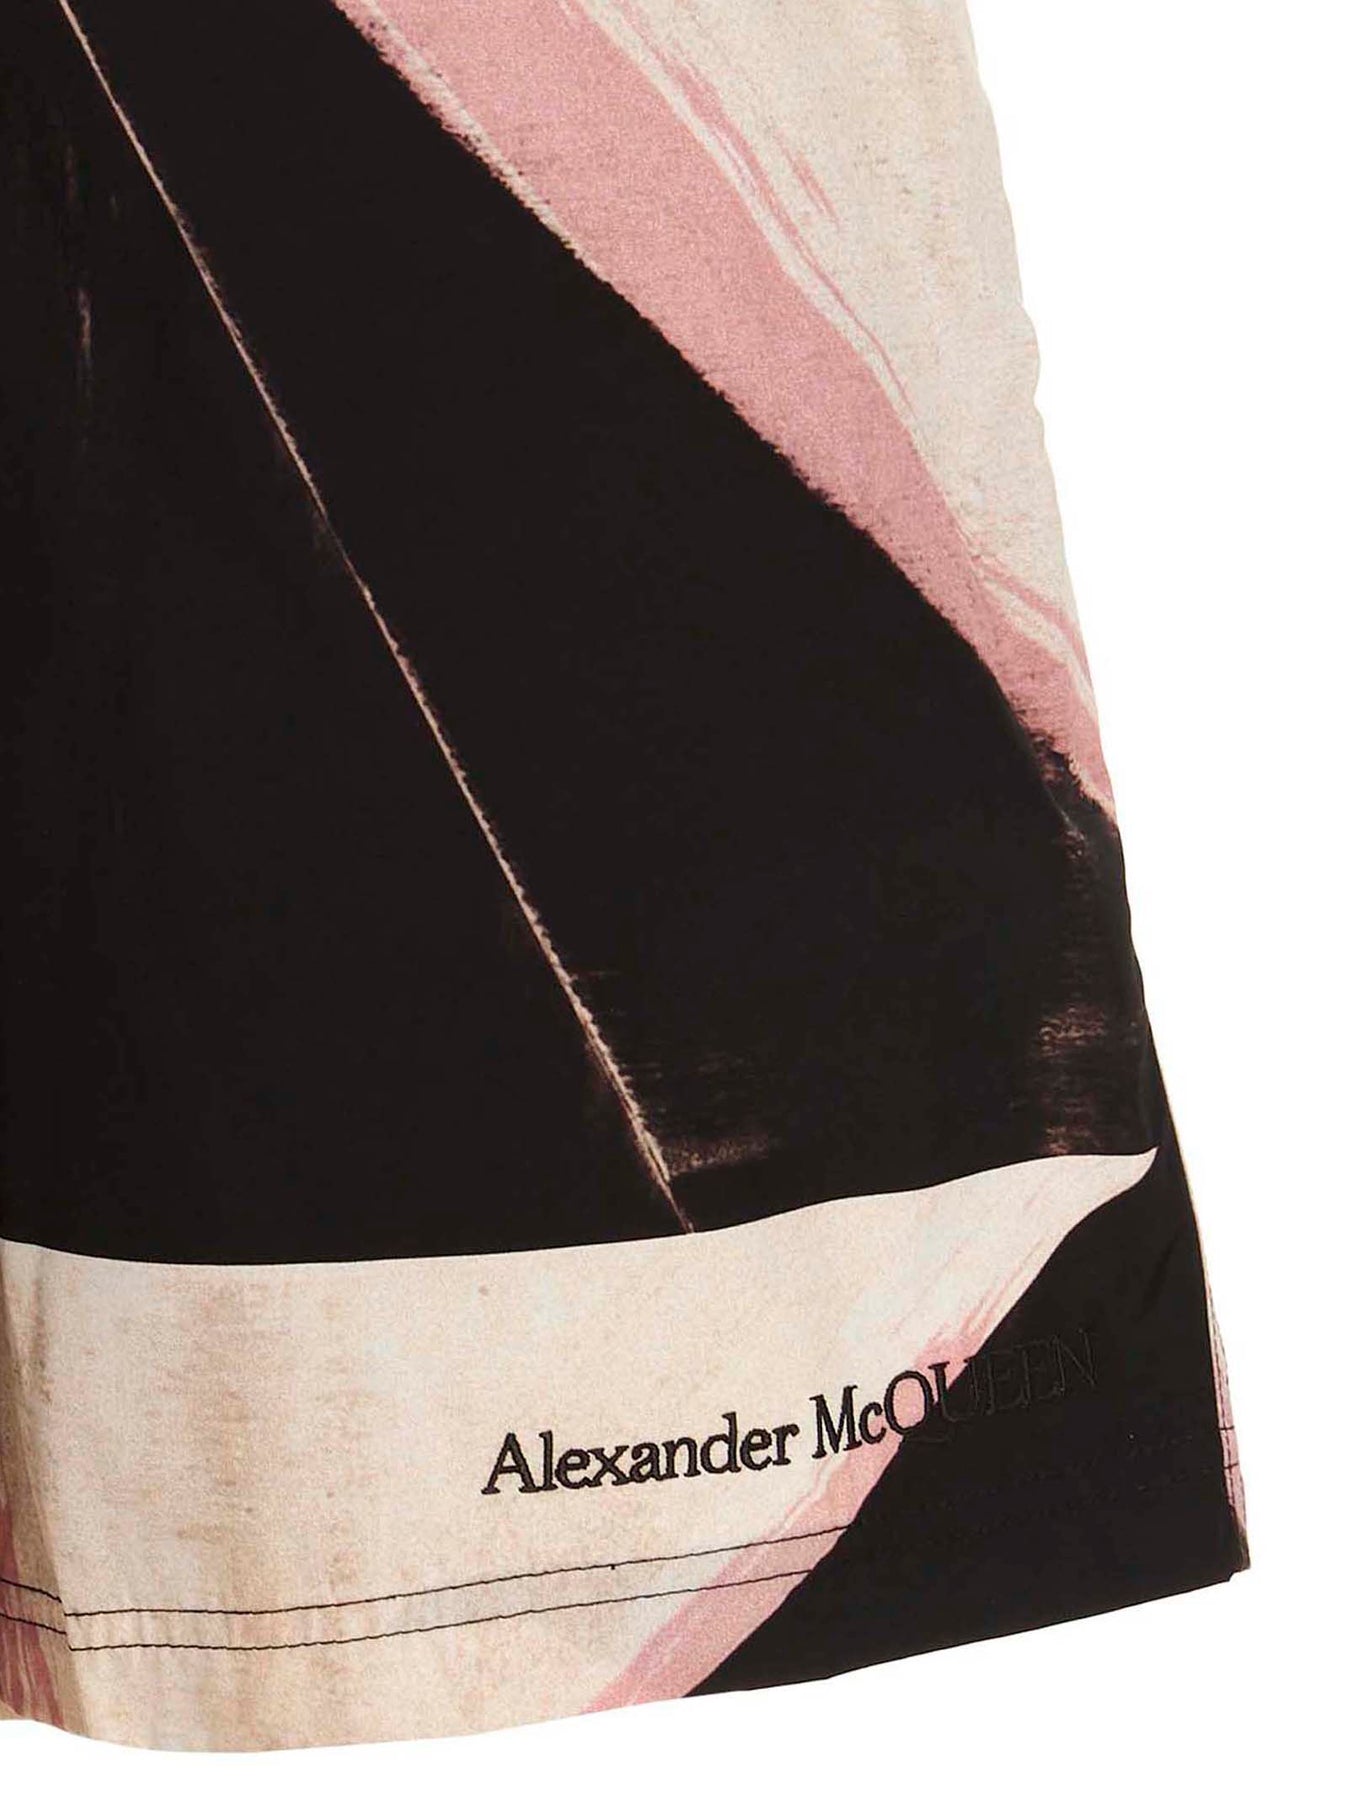 Alexander McQueen Printed Swim Trunks w/ Tags - Black, 9.75 Rise Swimwear,  Clothing - ALE160710